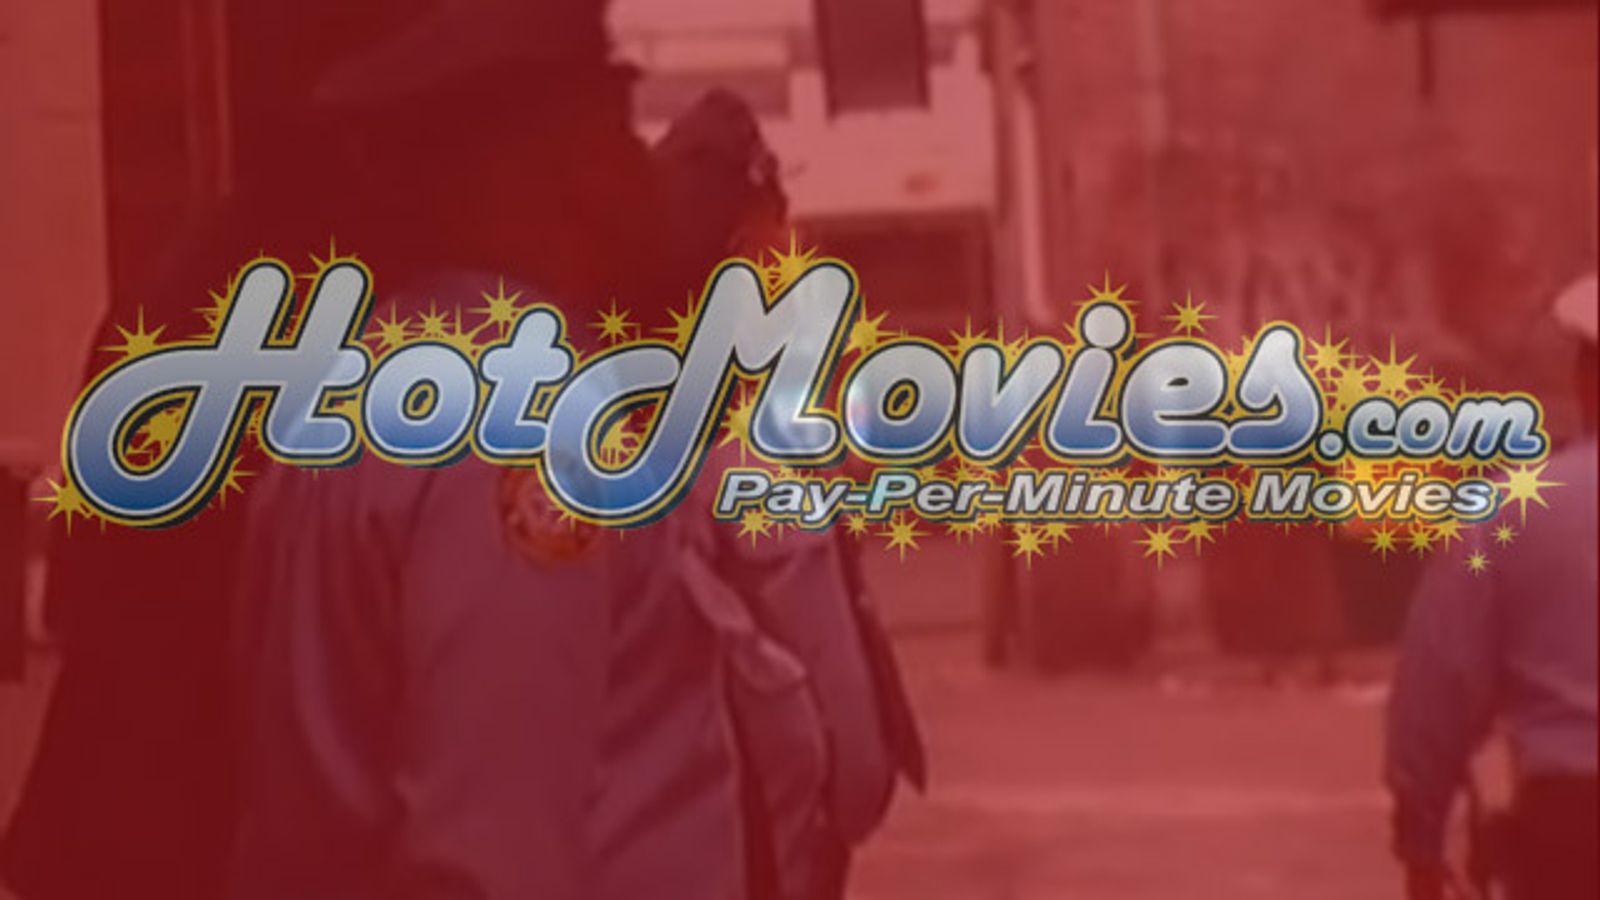 HotMovies, Paradox Team for 'Saturday Night Fever' Web Premiere